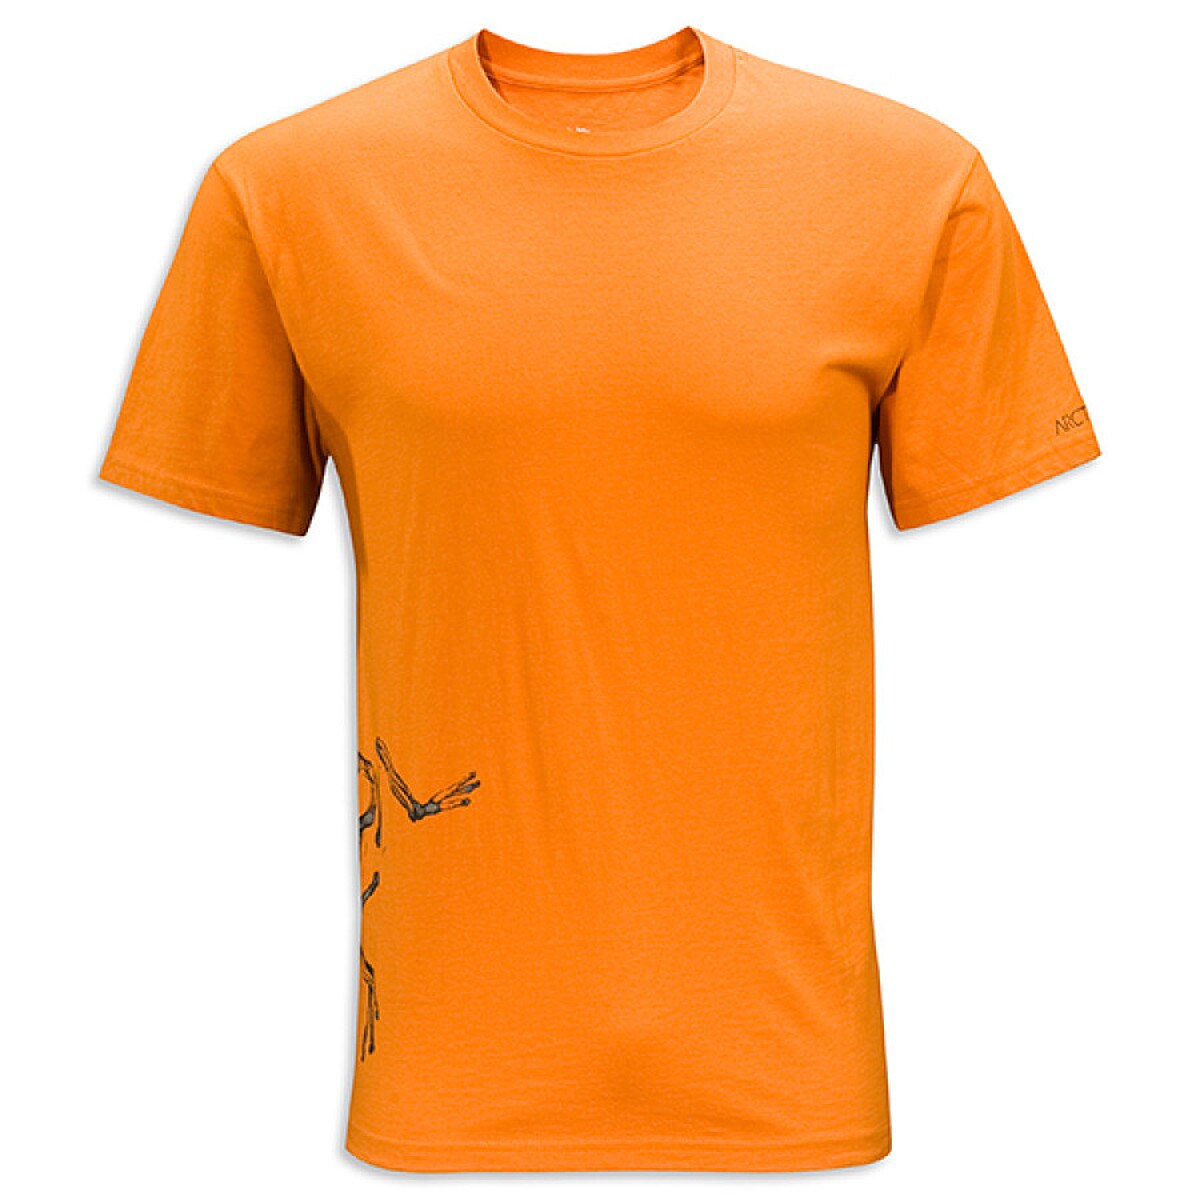 Arc'teryx New Burn T-Shirt - Short-Sleeve - Men's - Clothing